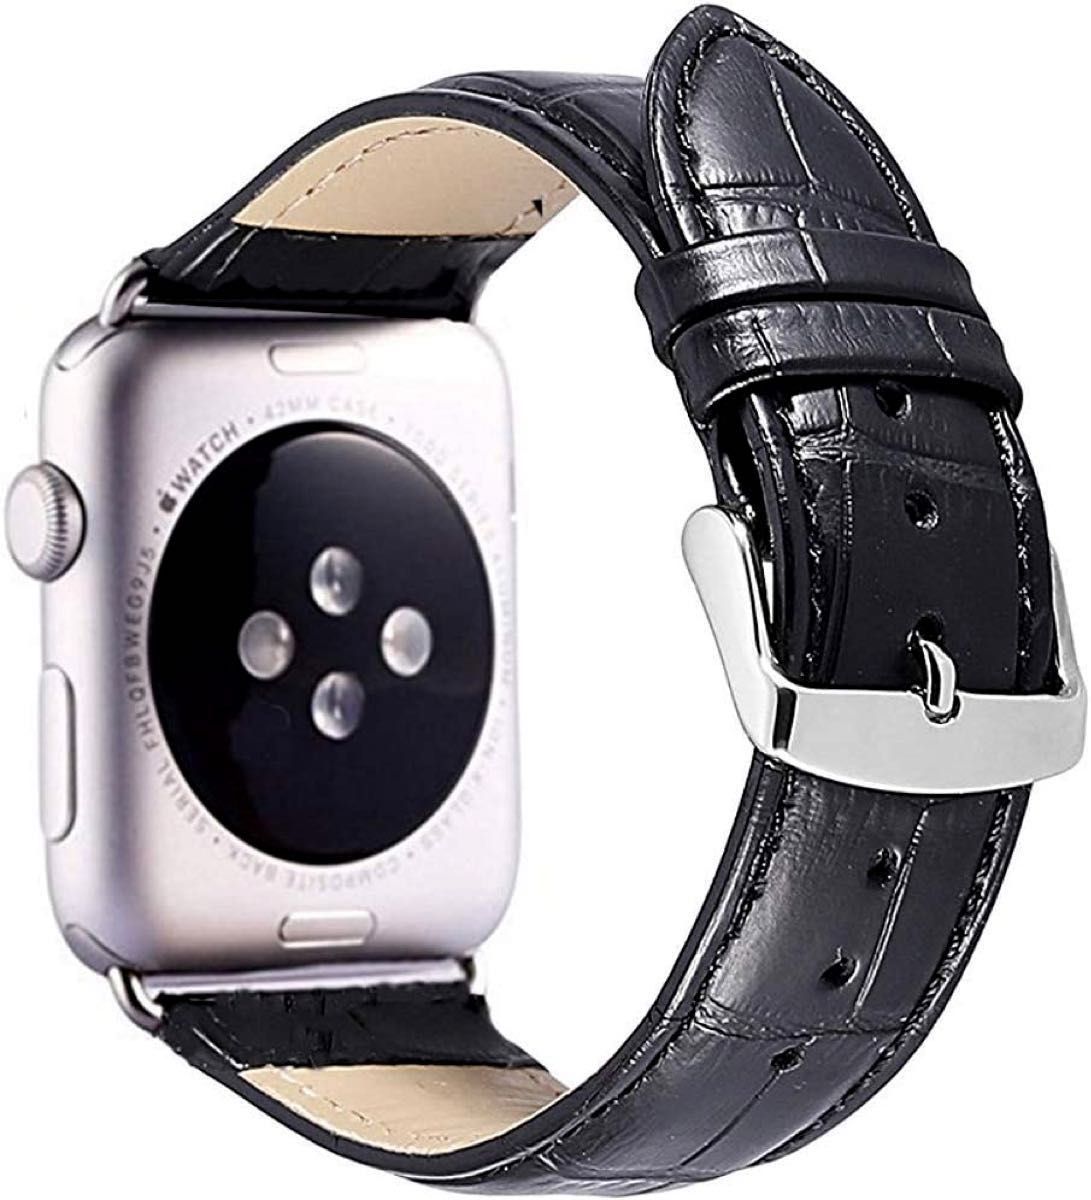 AppleWatch バンド レザー アップルウォッチ 交換 ベルト 38mm Apple Watch